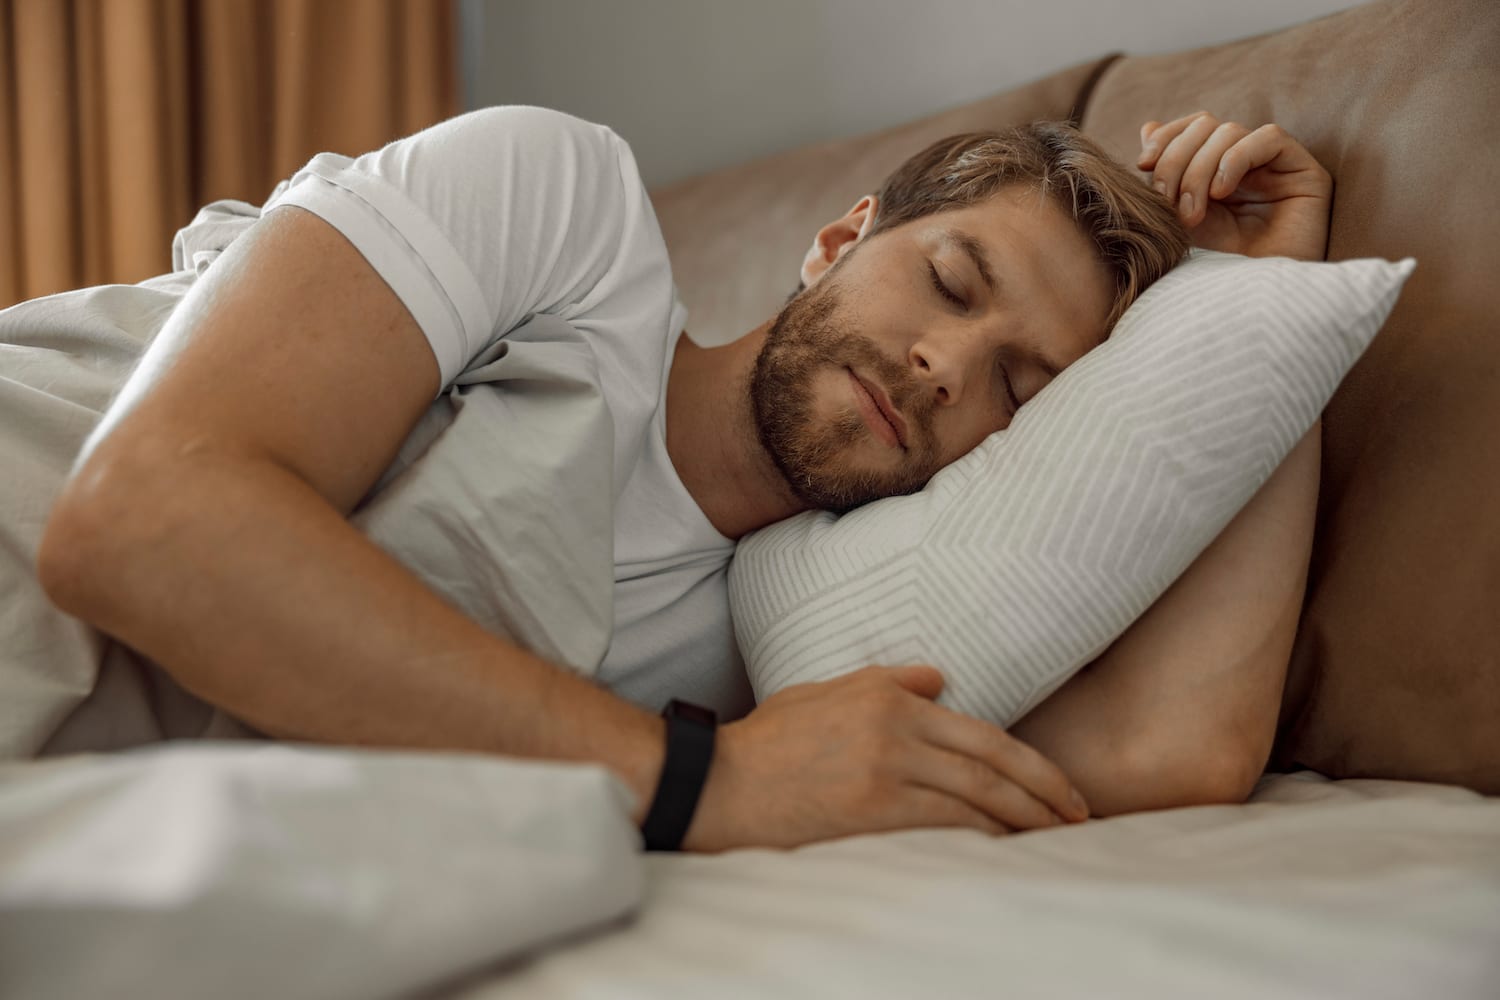 Sleeping with big b👀bs🙄 always having to adjust them because it